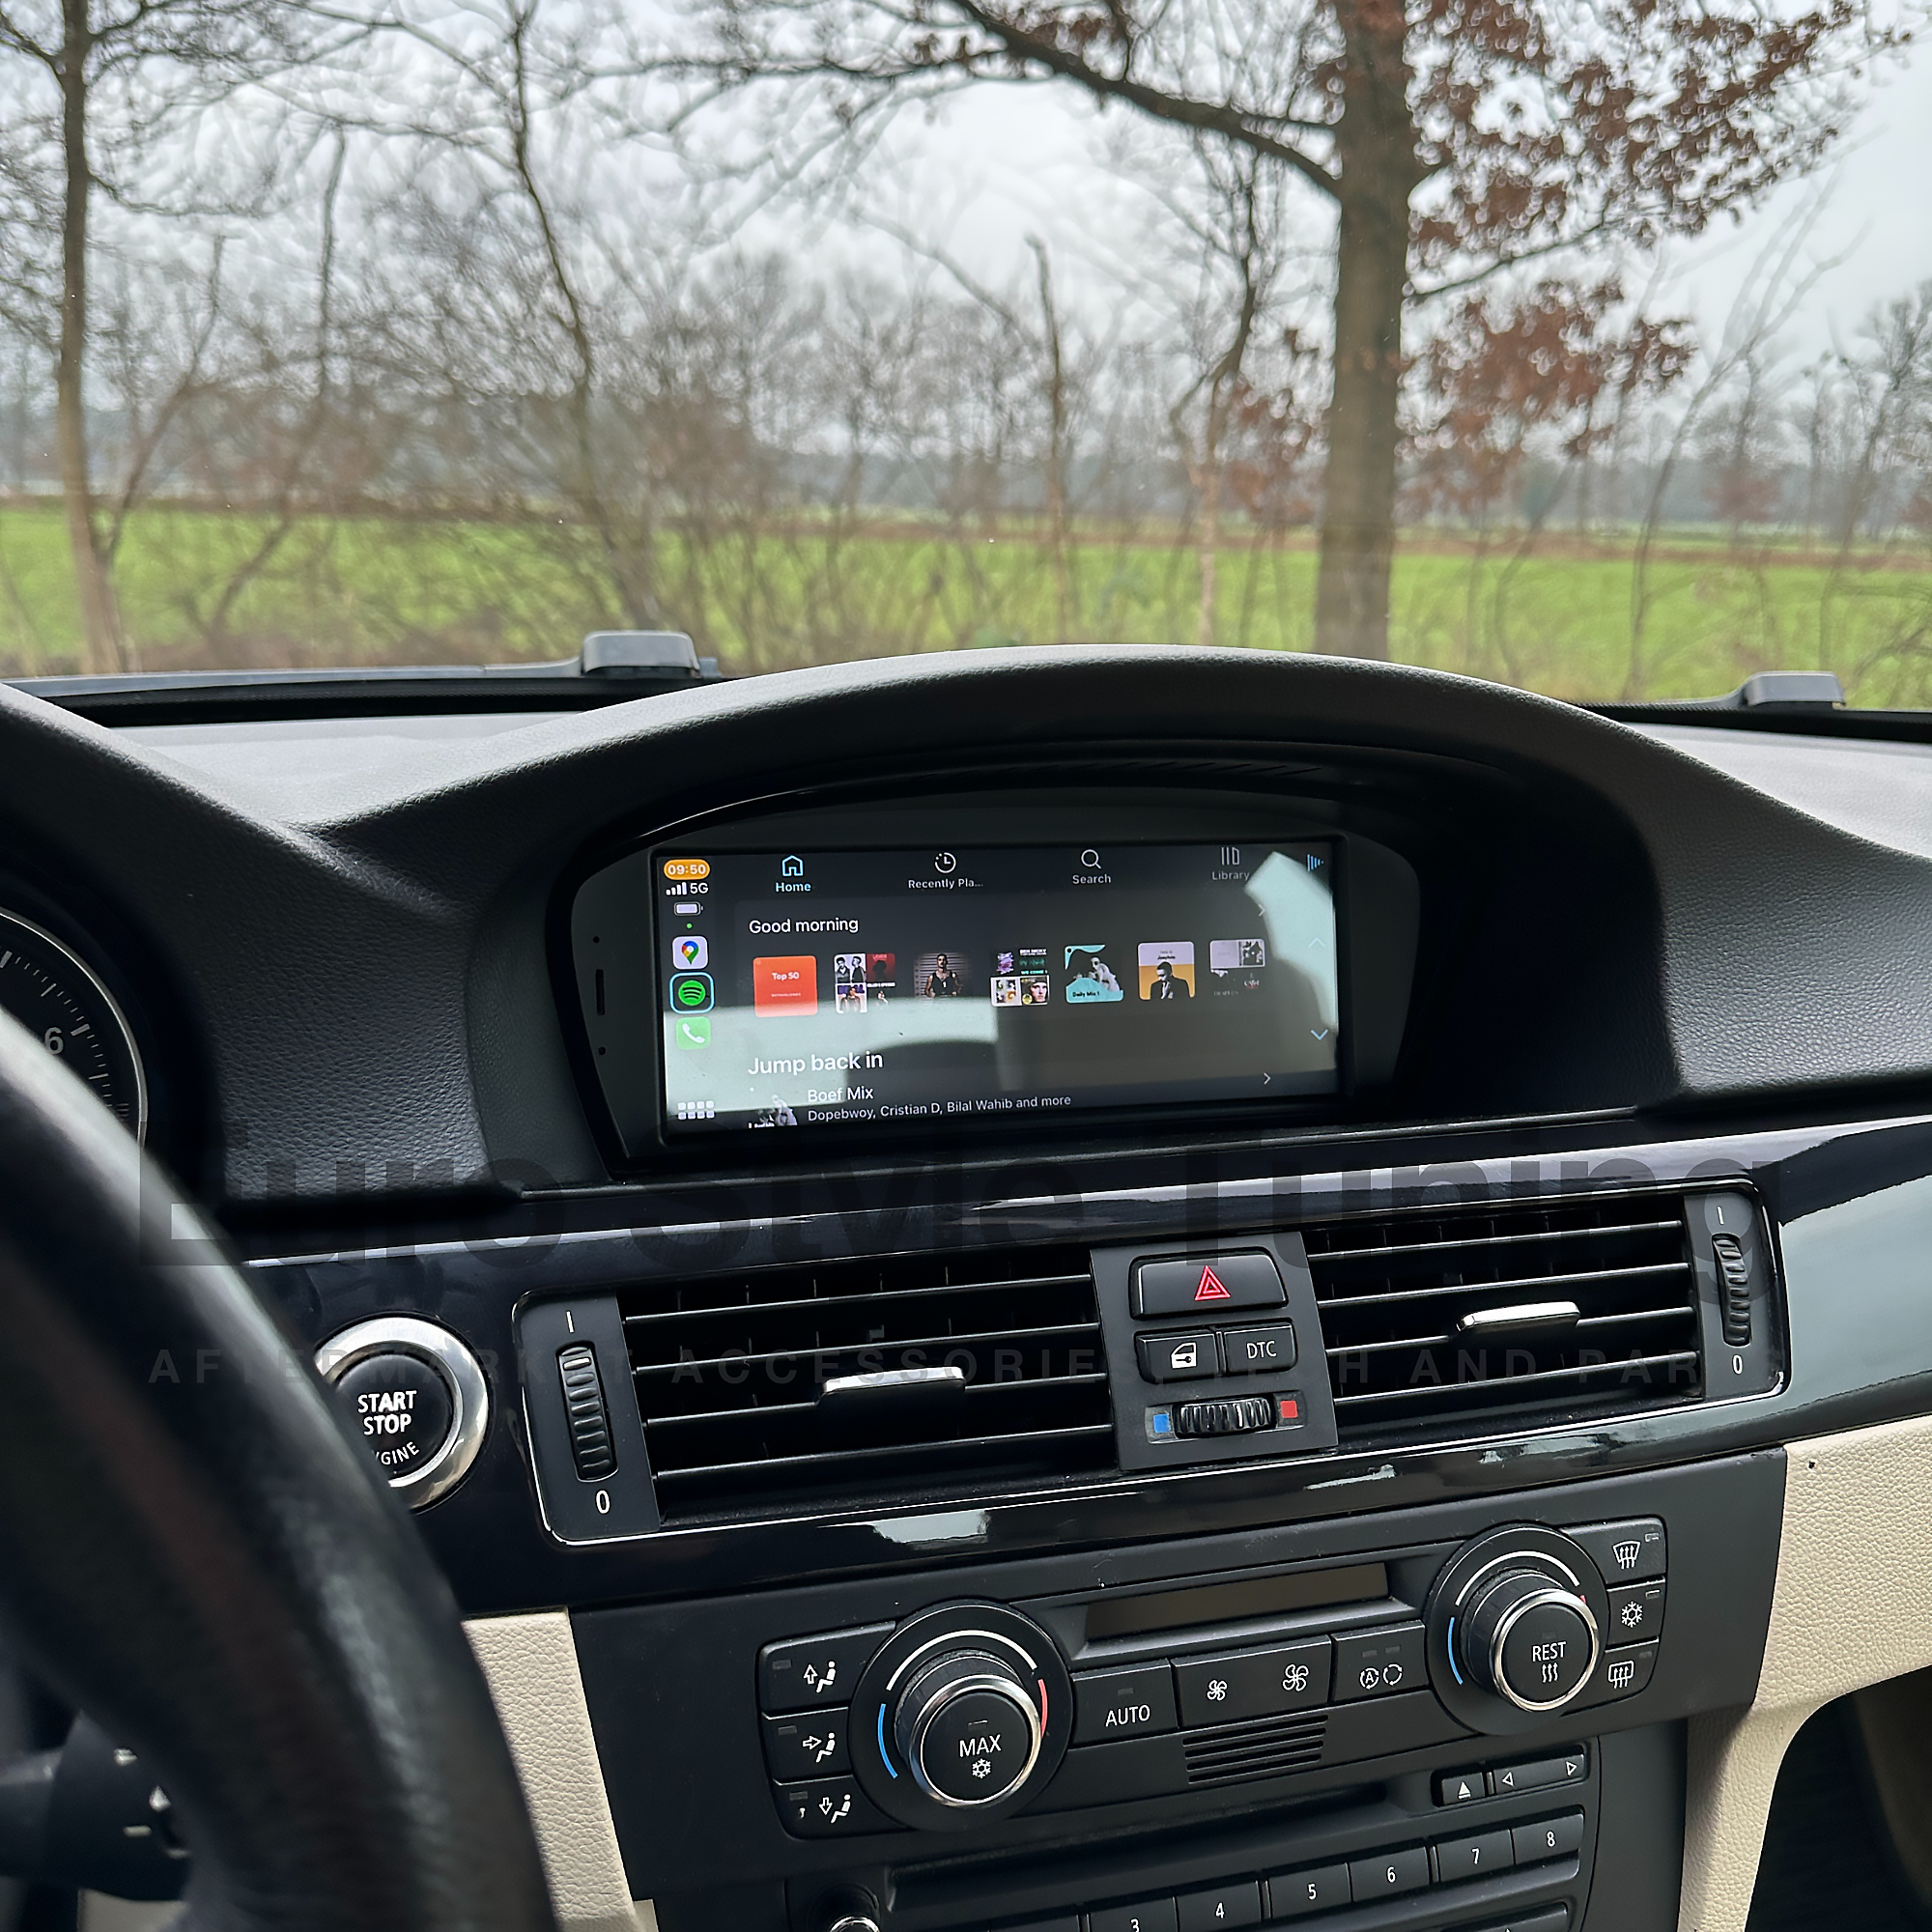 BMW 3 & 5 Series Wireless CarPlay & Android Auto 8.8inch Touch Screen Multimedia Display Upgrade 2004-2012 CCC CIC E90 E91 E92 E93 E60 E61 E63